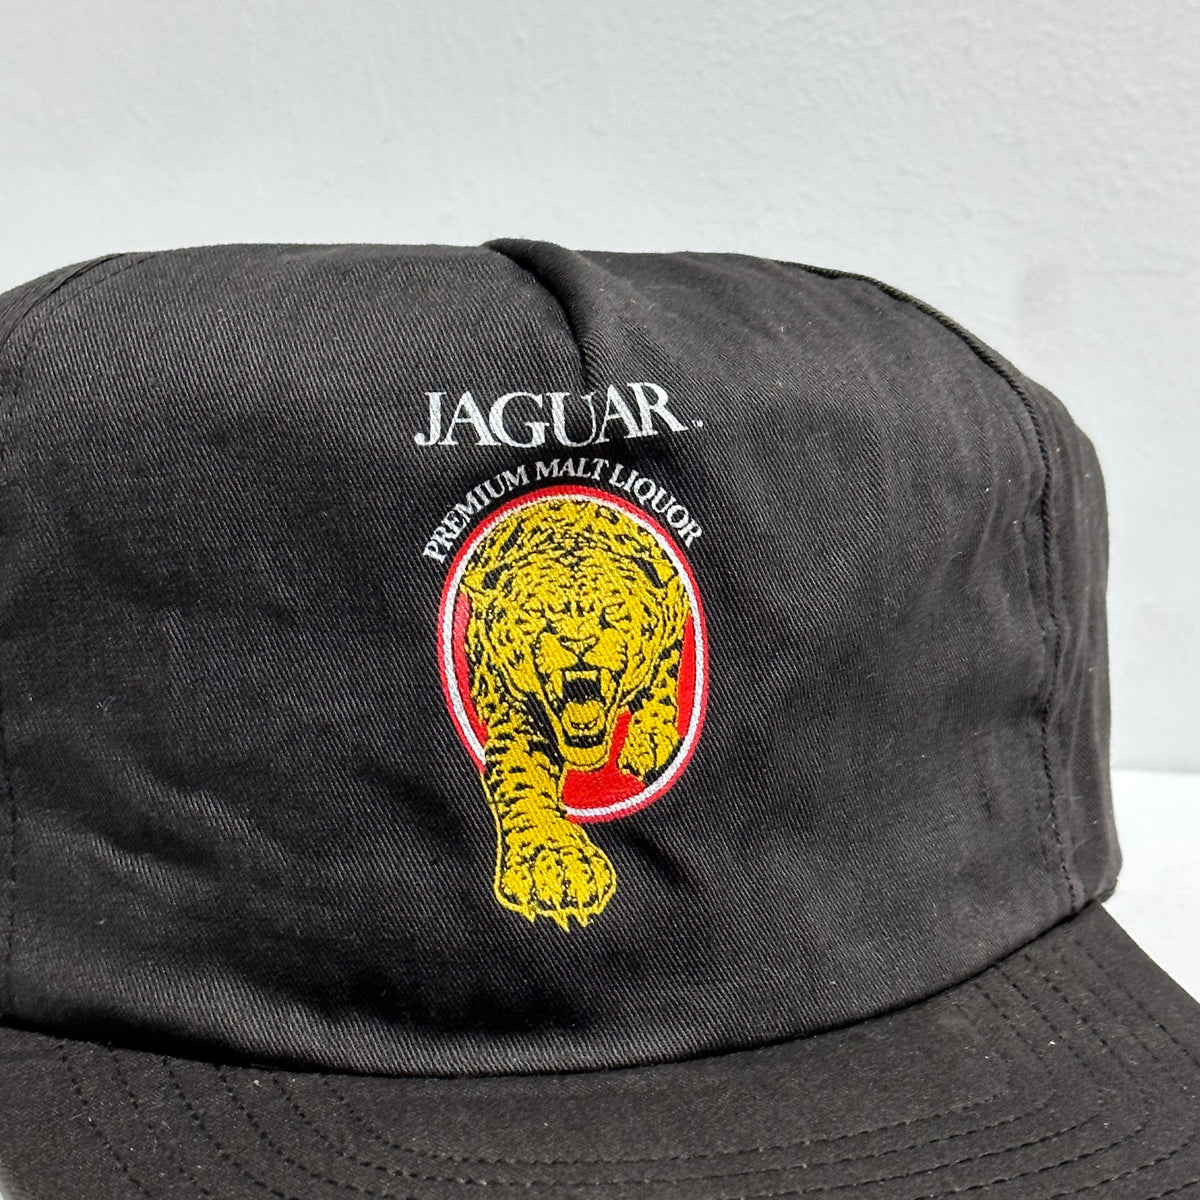 Vintage Jaguar Premium Malt Liquor Snapback Cap Hat Made in USA – Old ...